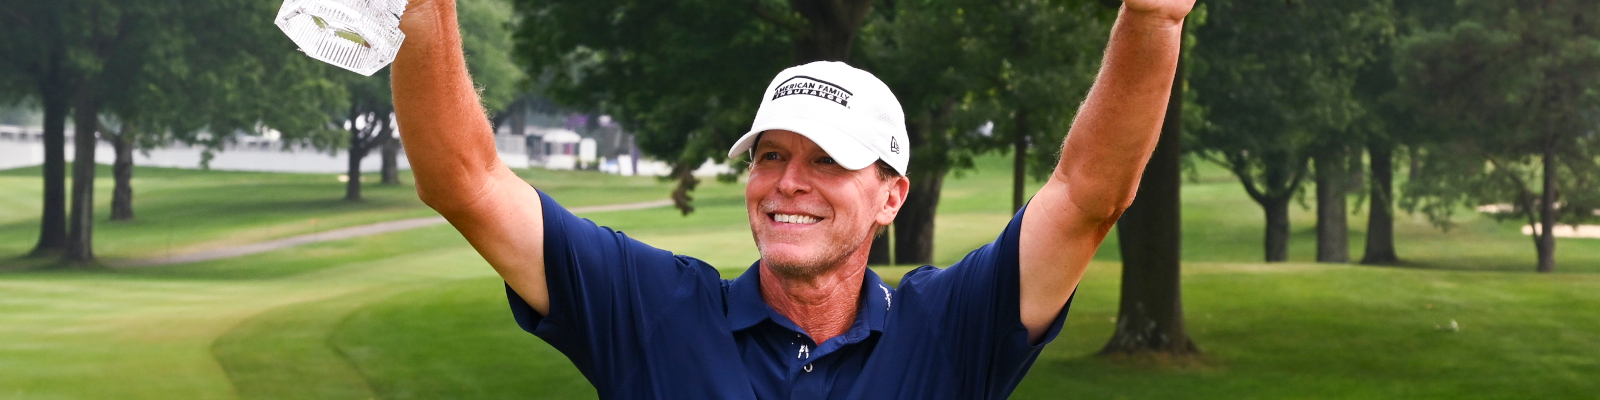 Steve Stricker (Photo by Tracy Wilcox/PGA TOUR via Getty Images)